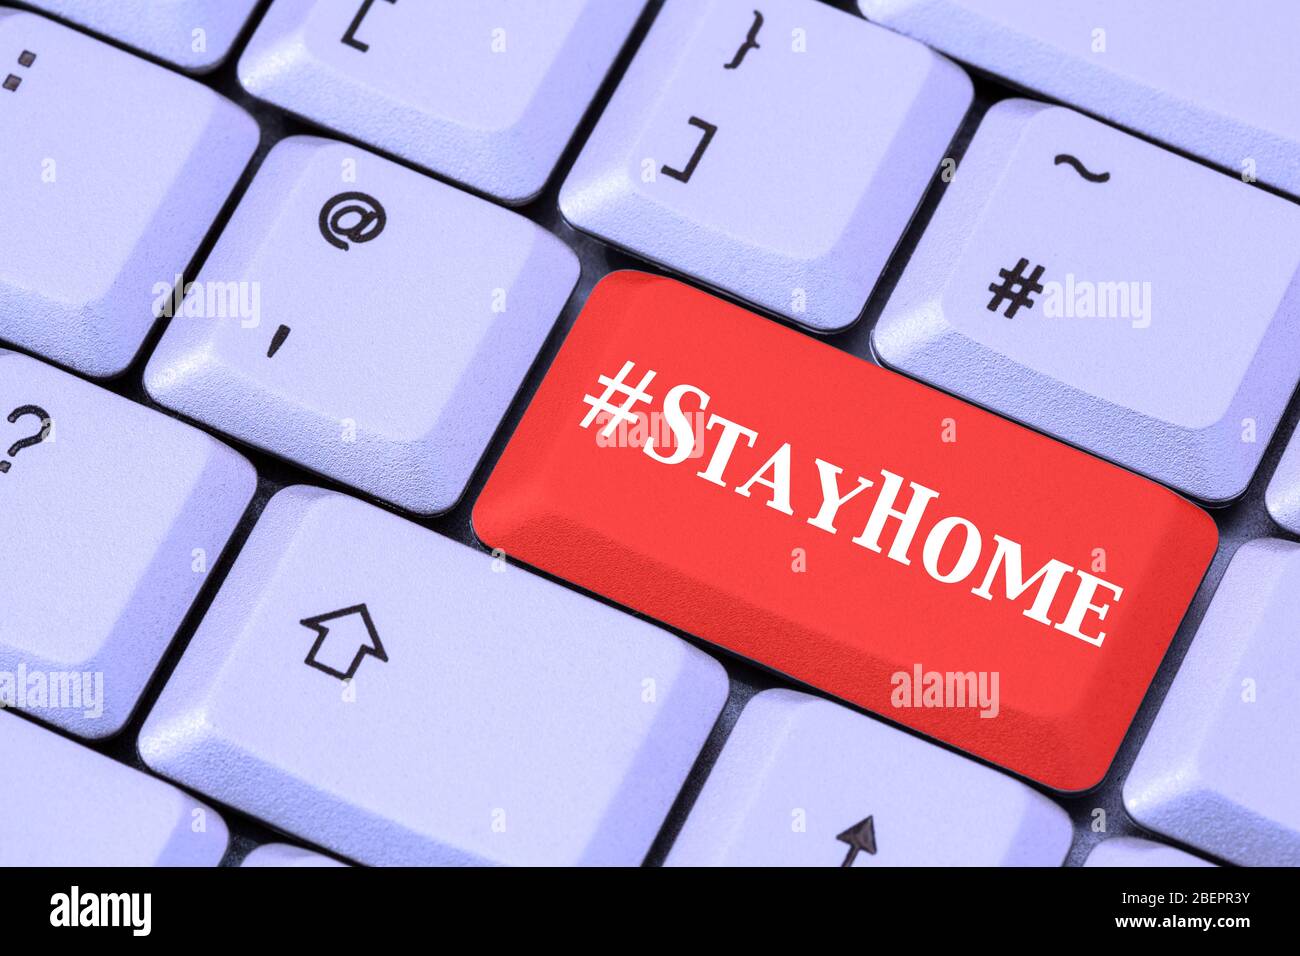 Un teclado con #StayHome en una tecla roja ENTER. Covid-19 coronavirus pandemia estancia en casa concepto de bloqueo en abril de 2020. Inglaterra, Reino Unido, Gran Bretaña Foto de stock